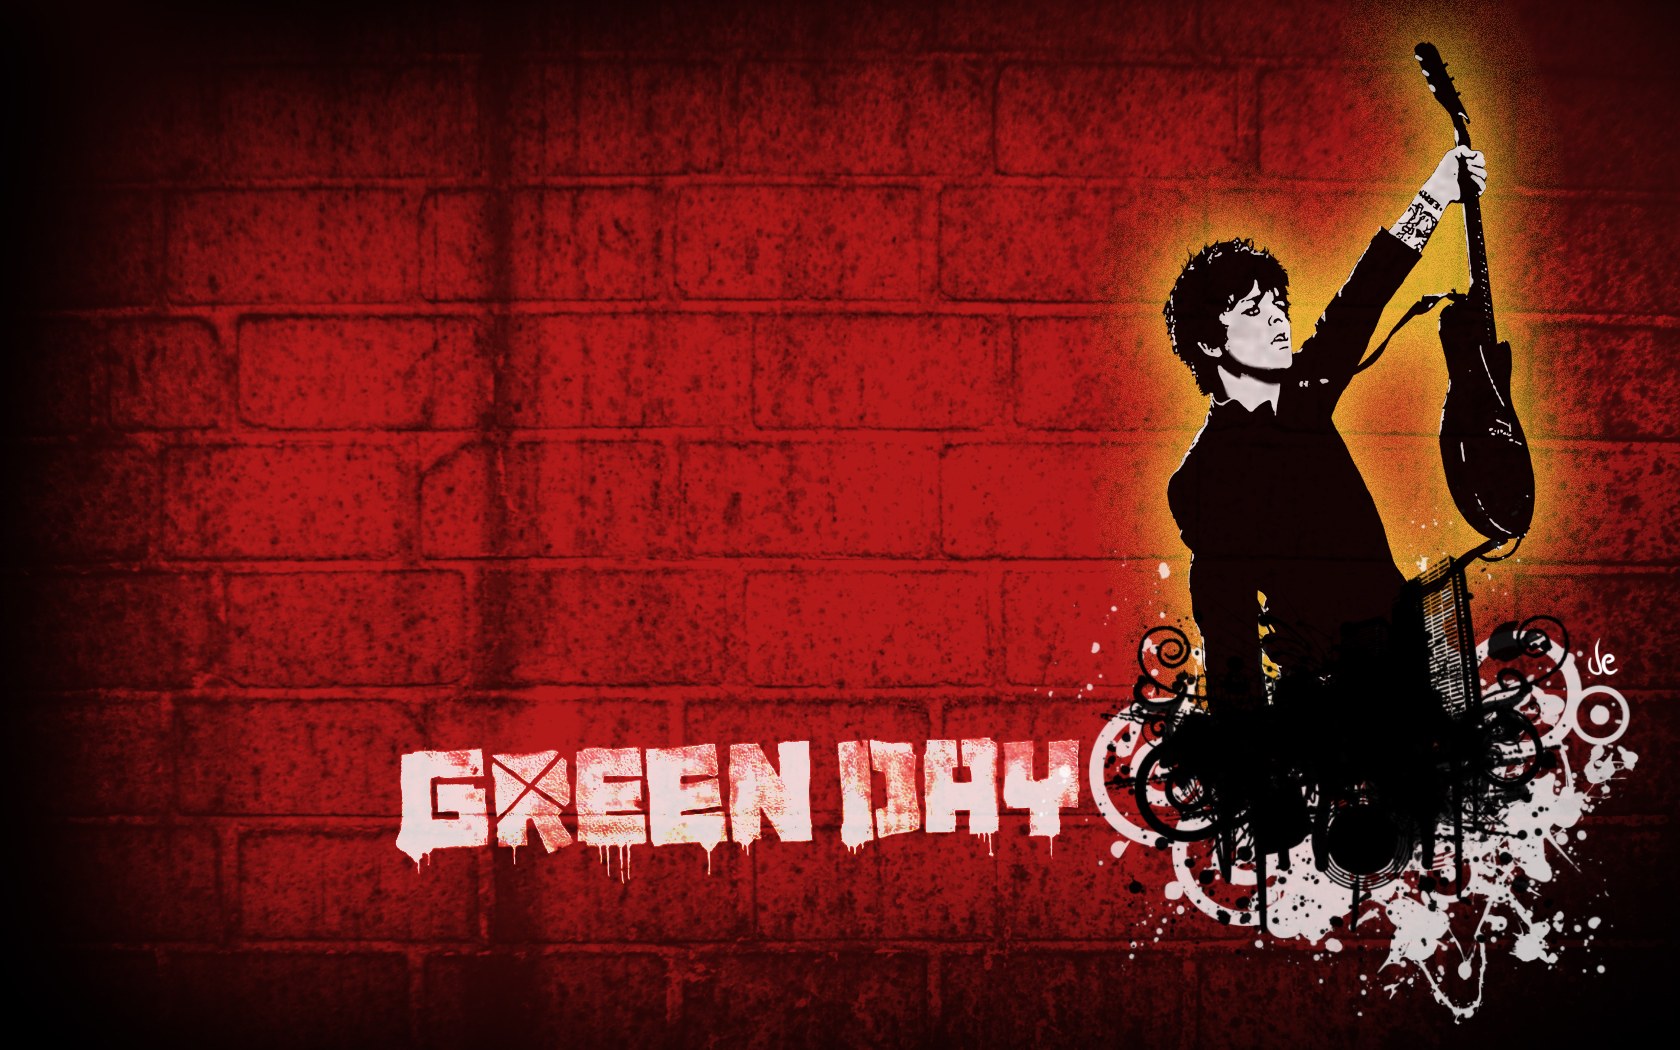 Green Day Wallpaper Full HD